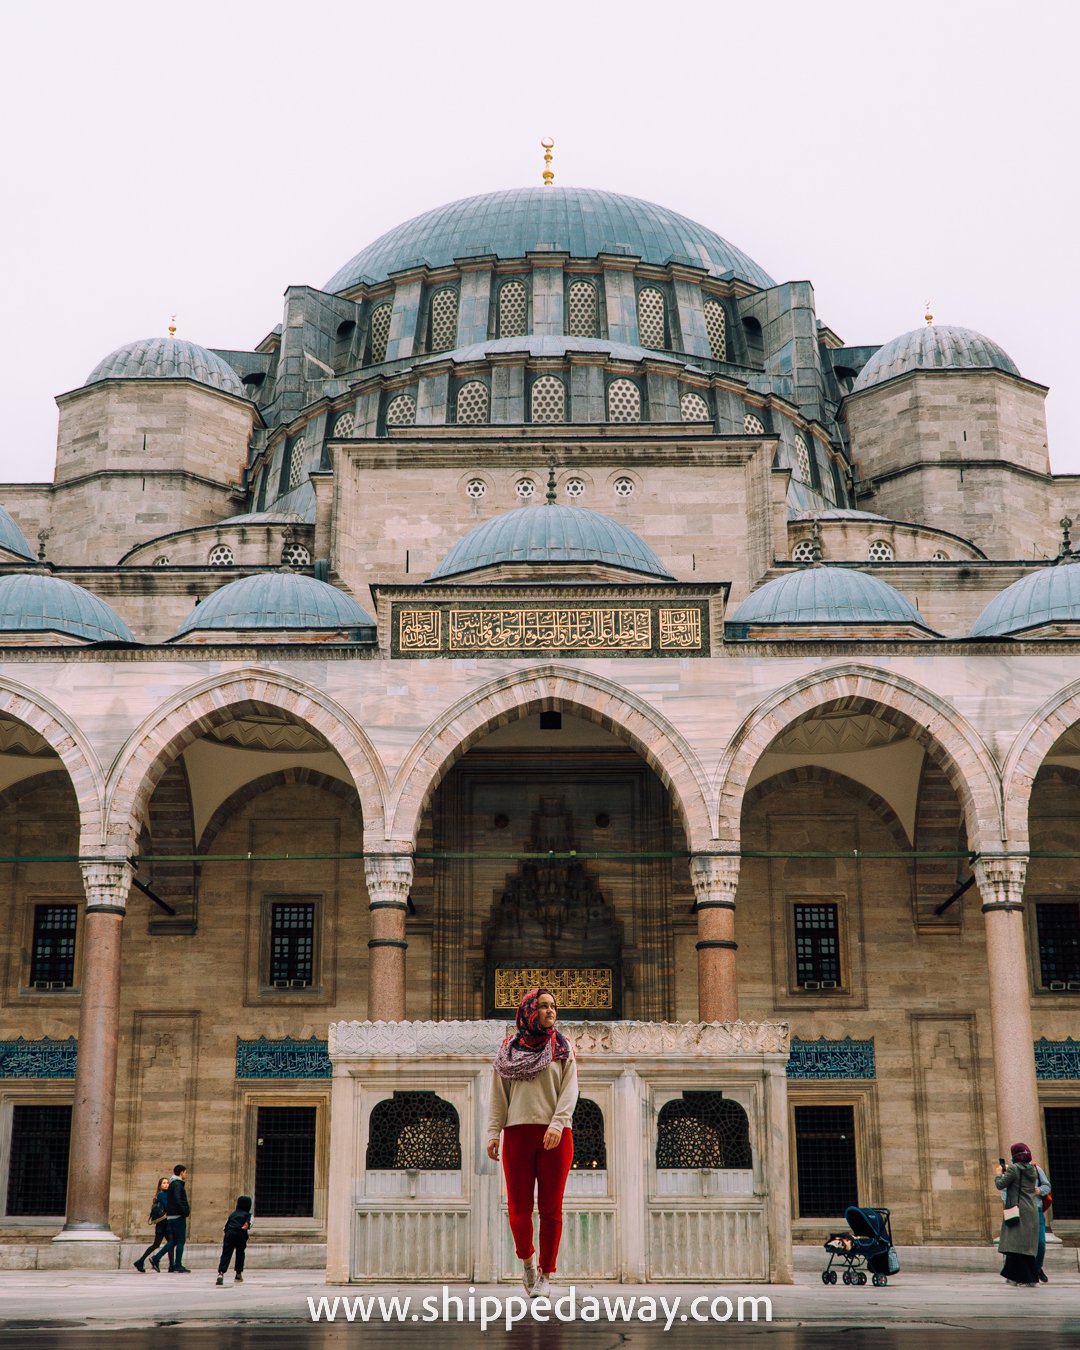 Arijana Tkalcec at Suleymaniye Mosque, Istanbul